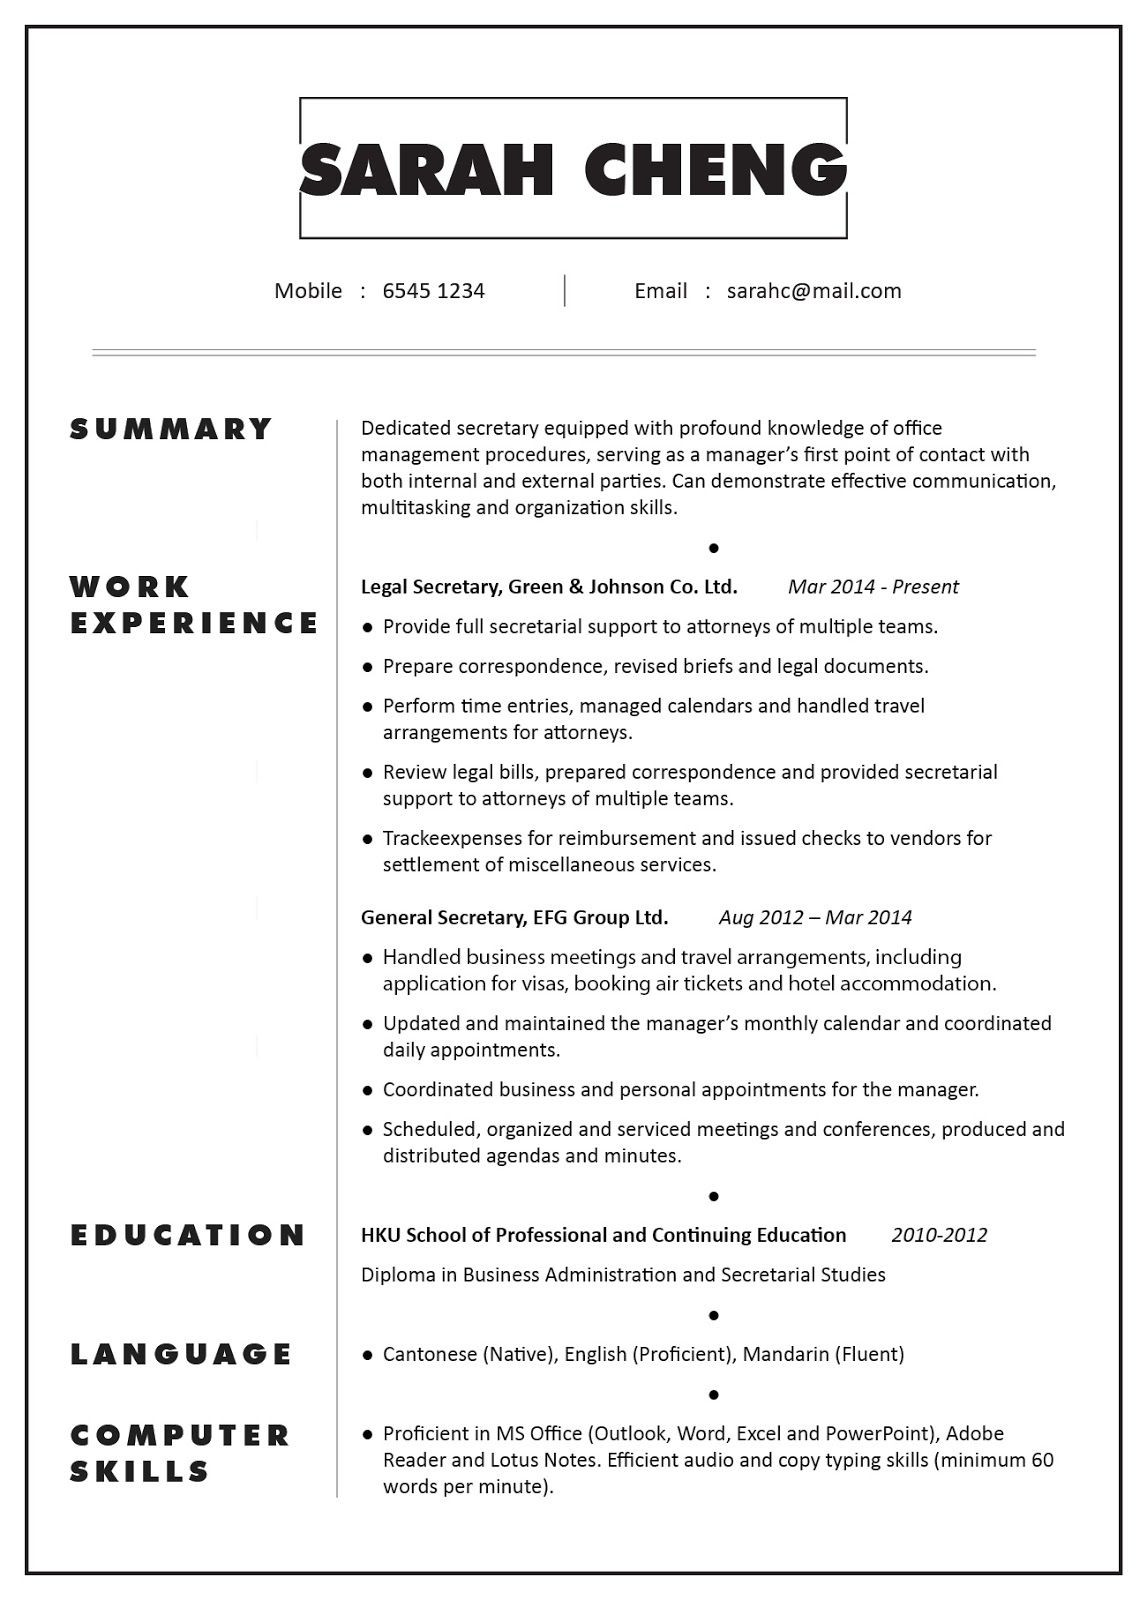 Sample Resume Objective for Secretary Position Secretary Resume Examples, Secretary Resume Examples 2019 …